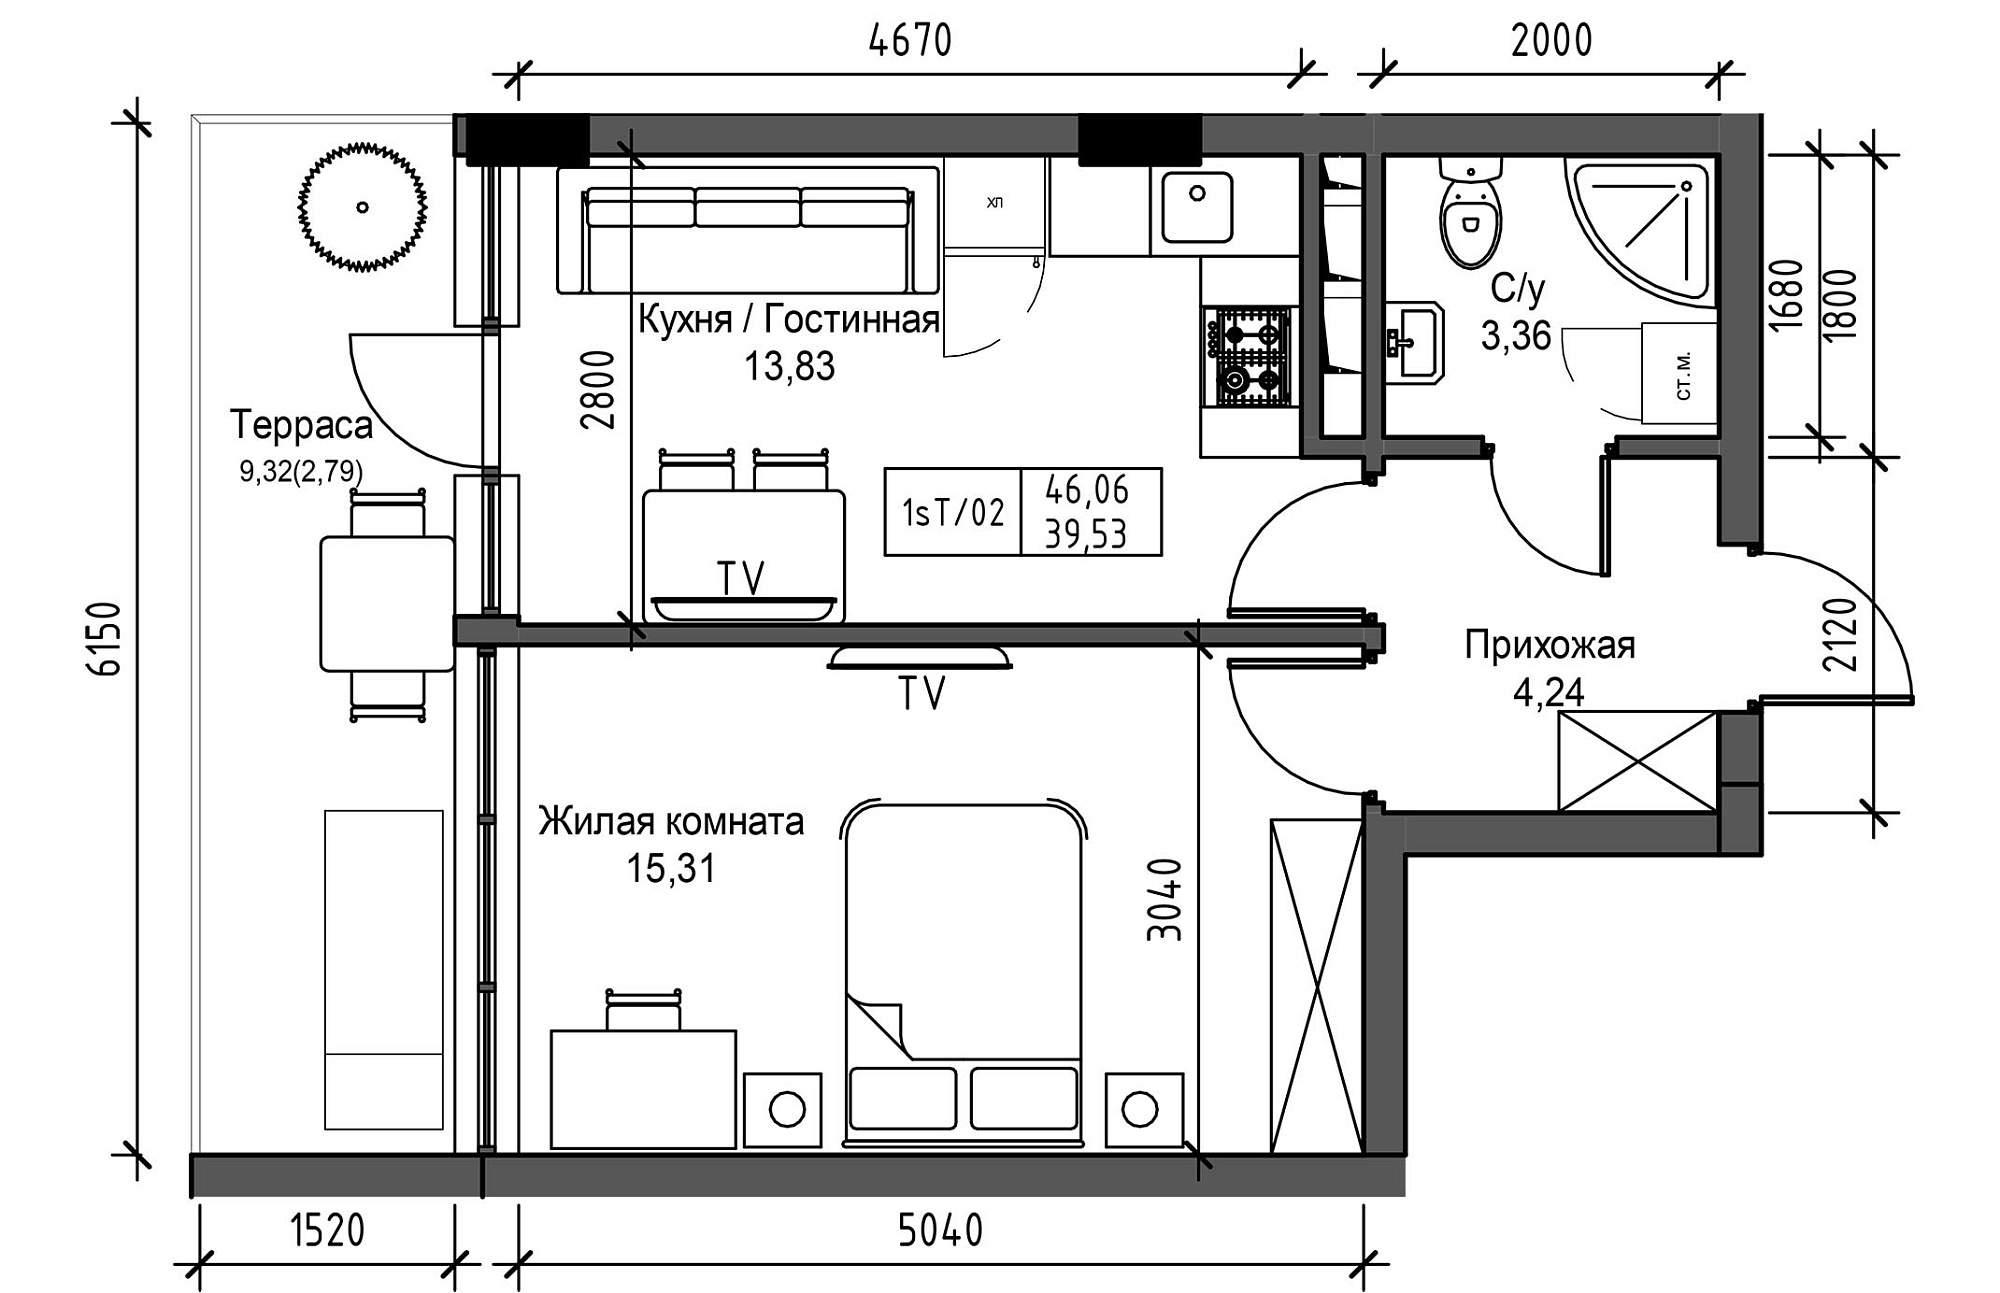 Планування 1-к квартира площею 39.53м2, UM-003-05/0044.